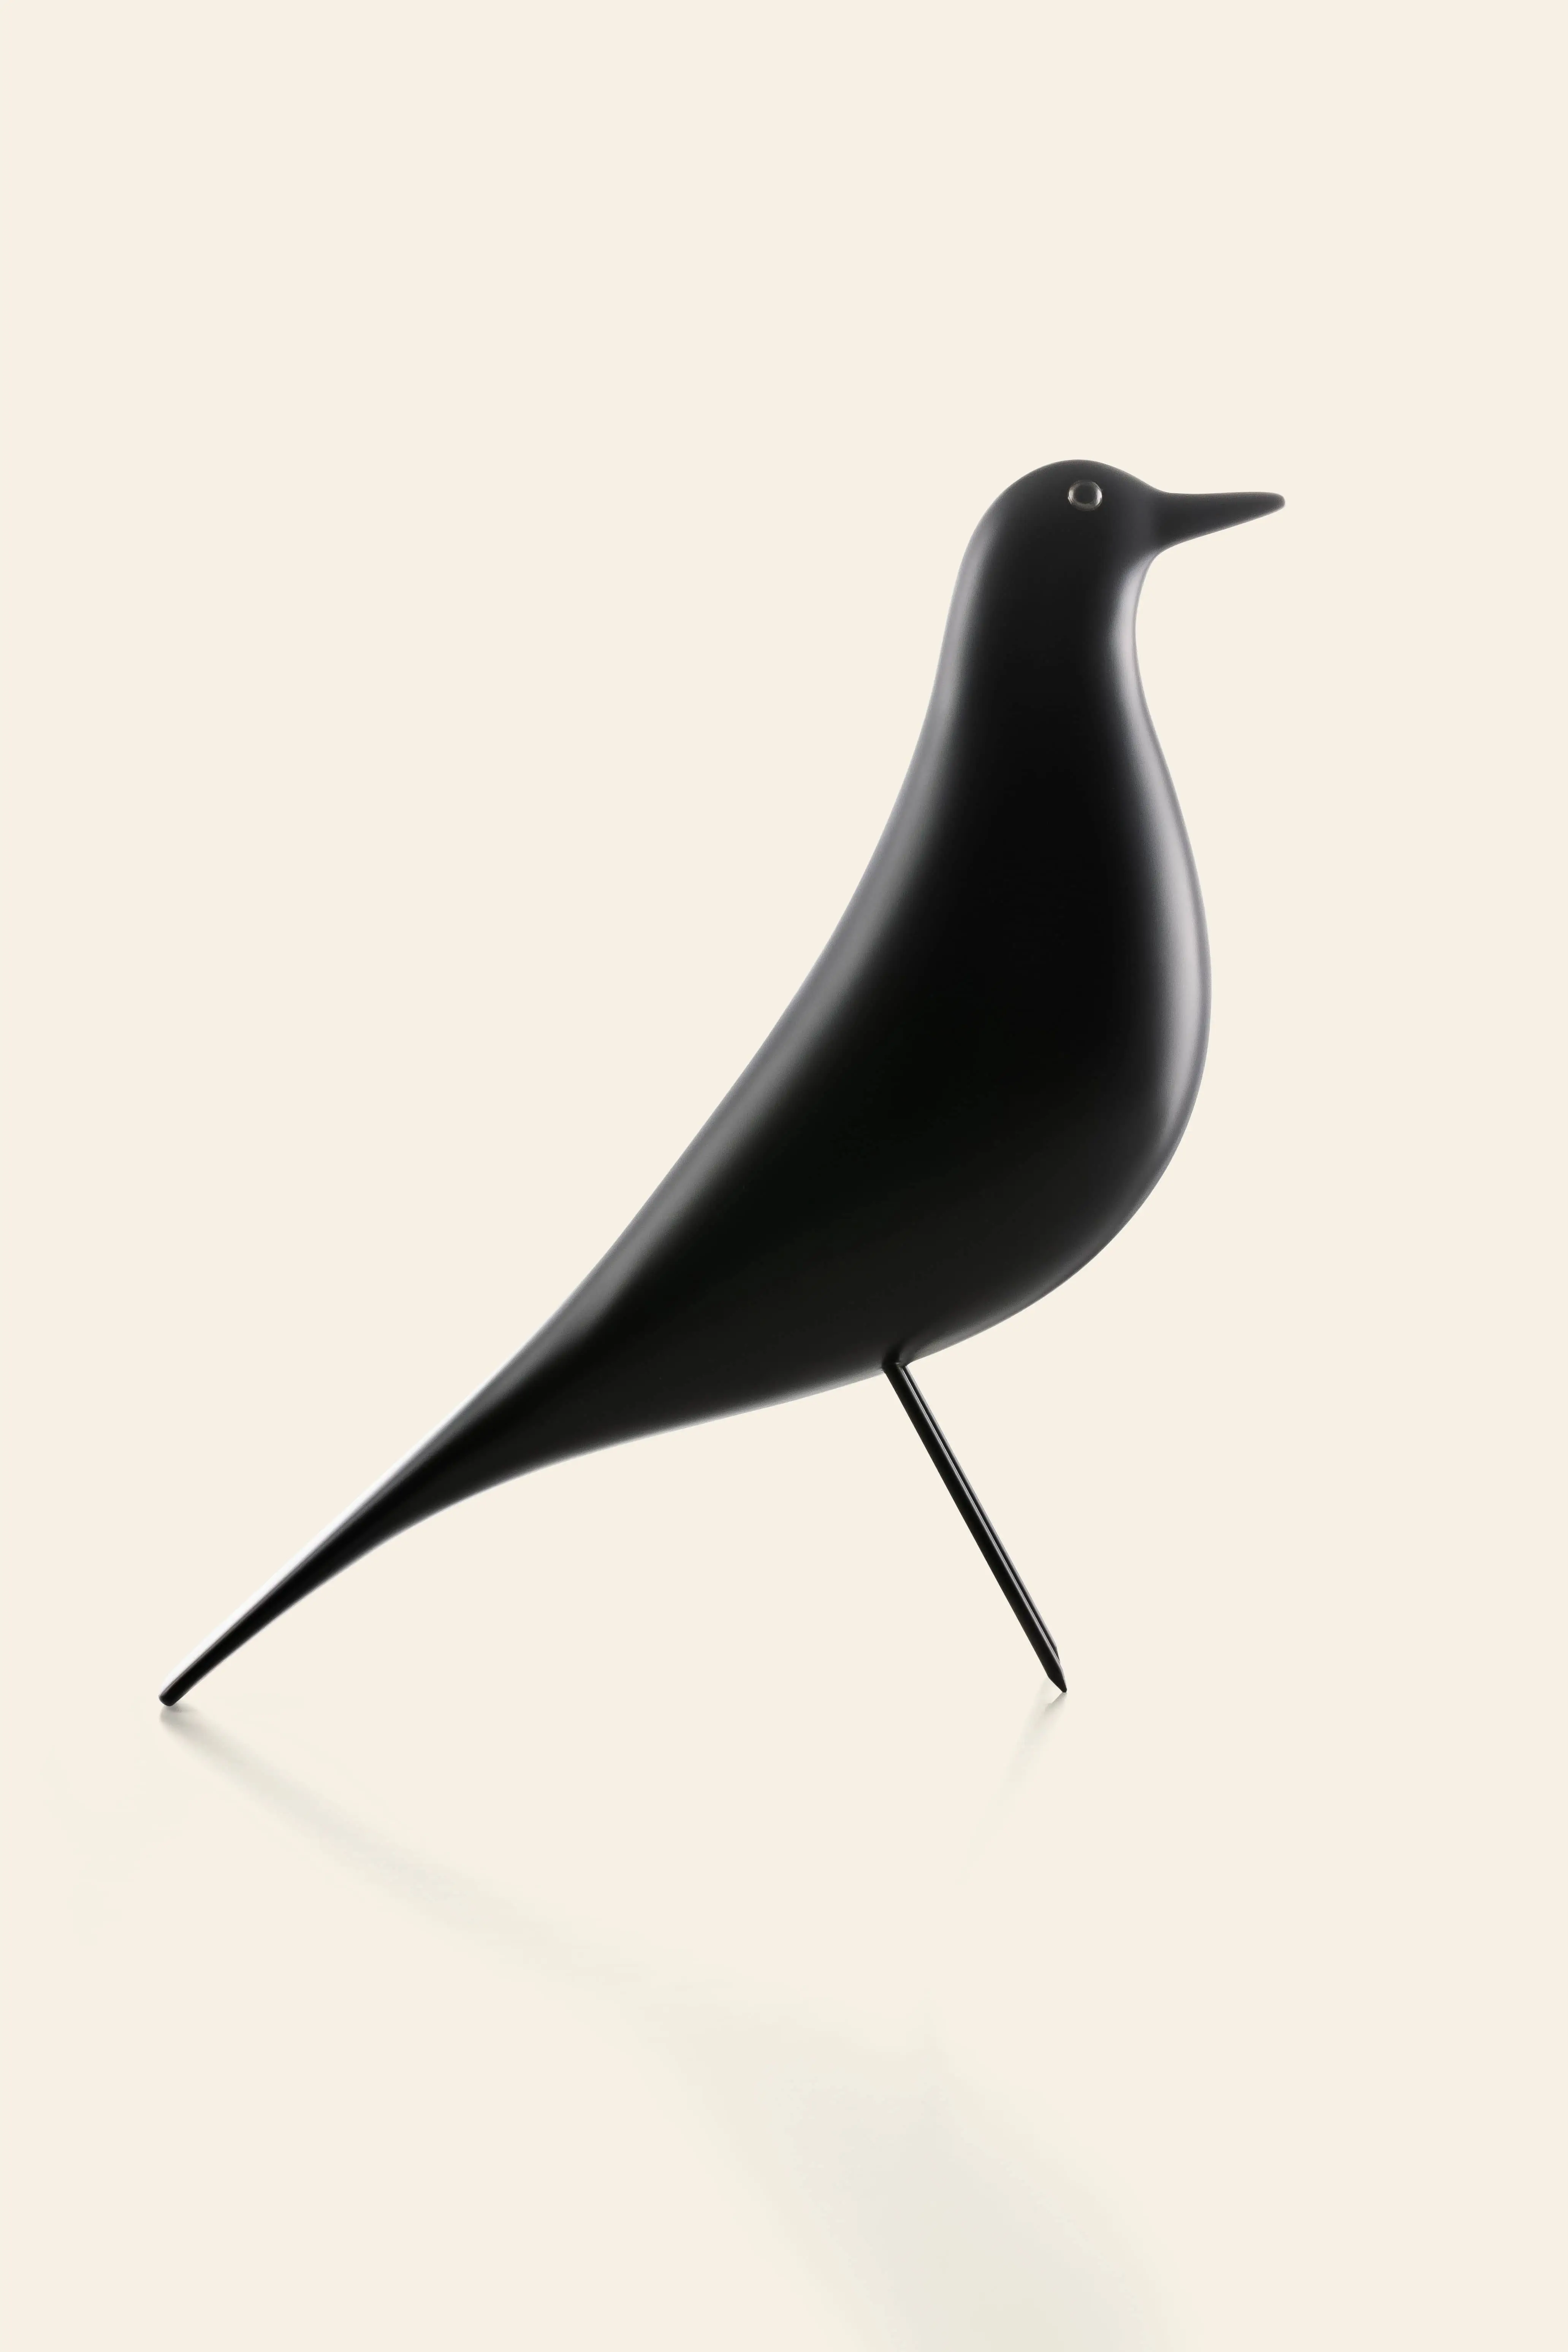 Vitra Eames House Bird Black 2